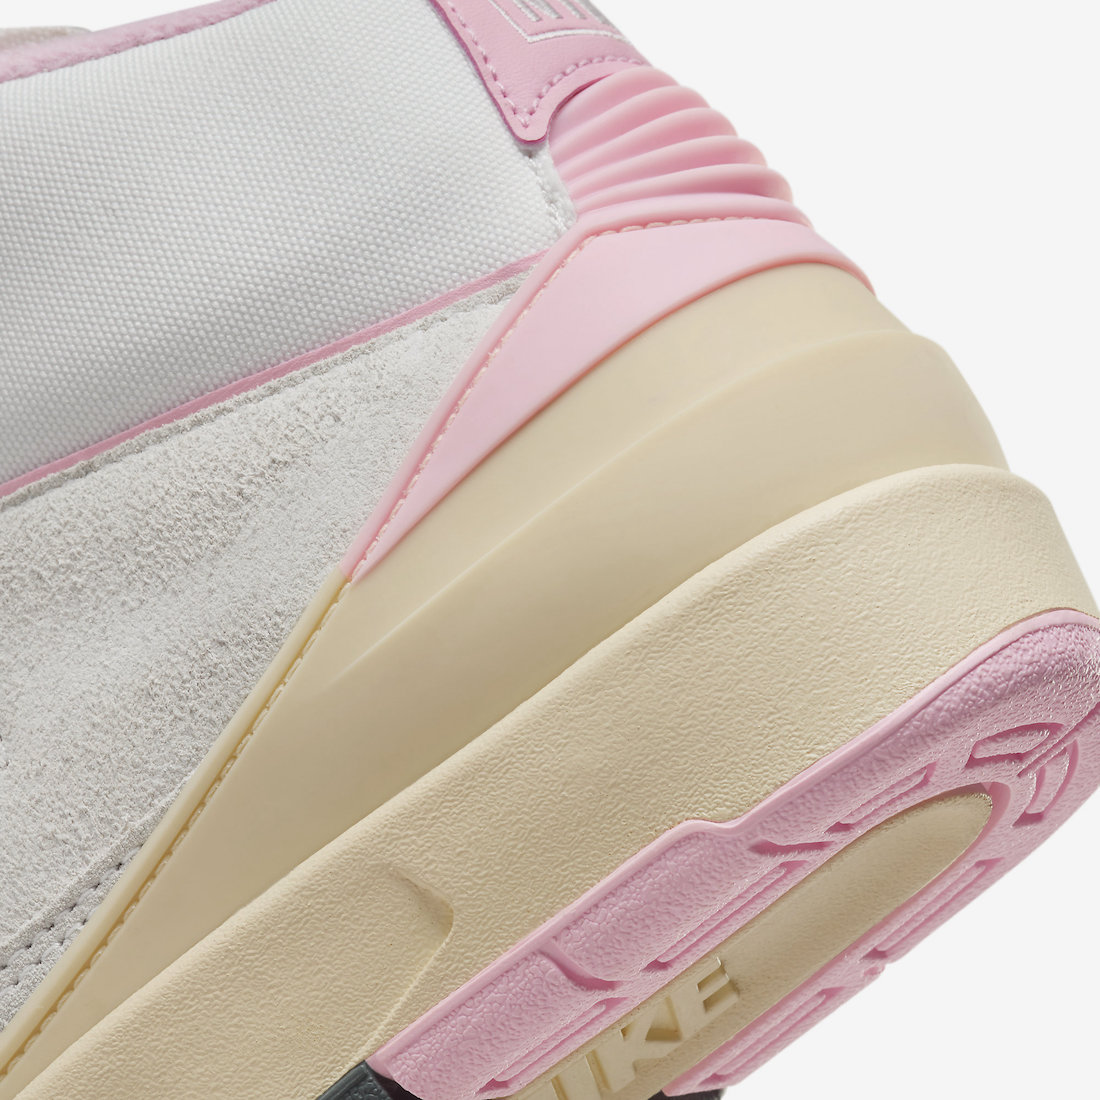 Women's Air Jordan 2 Soft Pink Heel